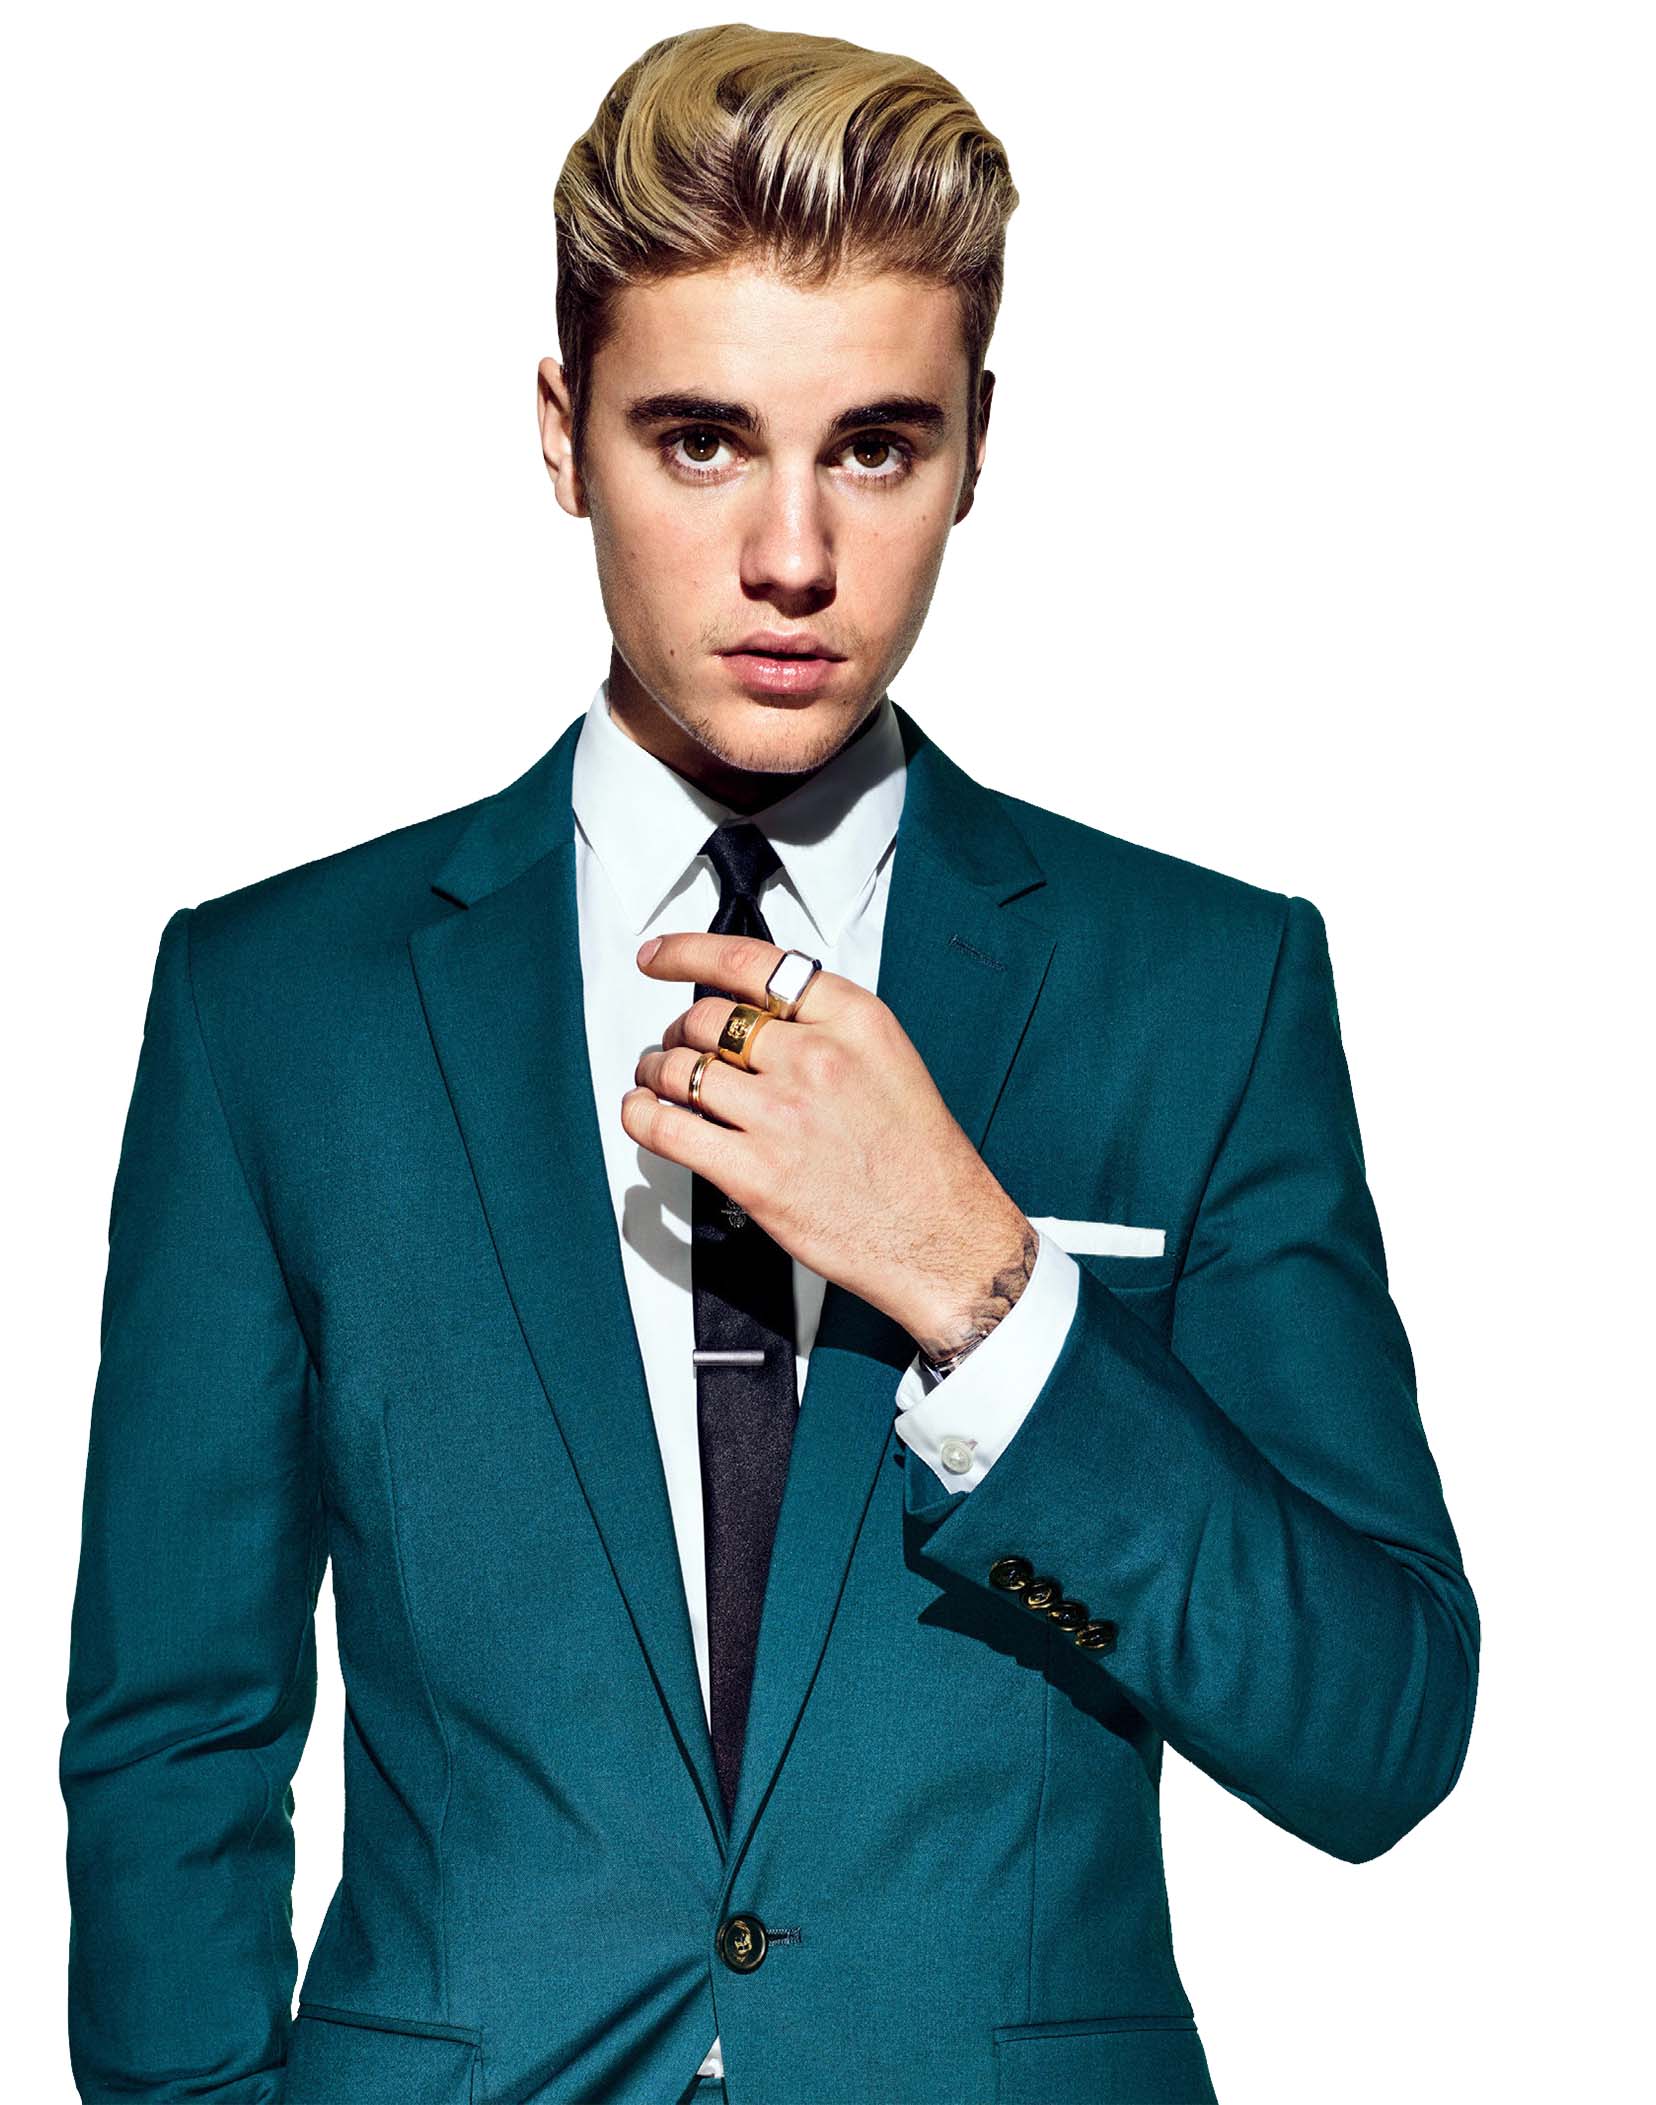 Cute Justin Bieber HD Wallpaper. Beautiful image HD Picture